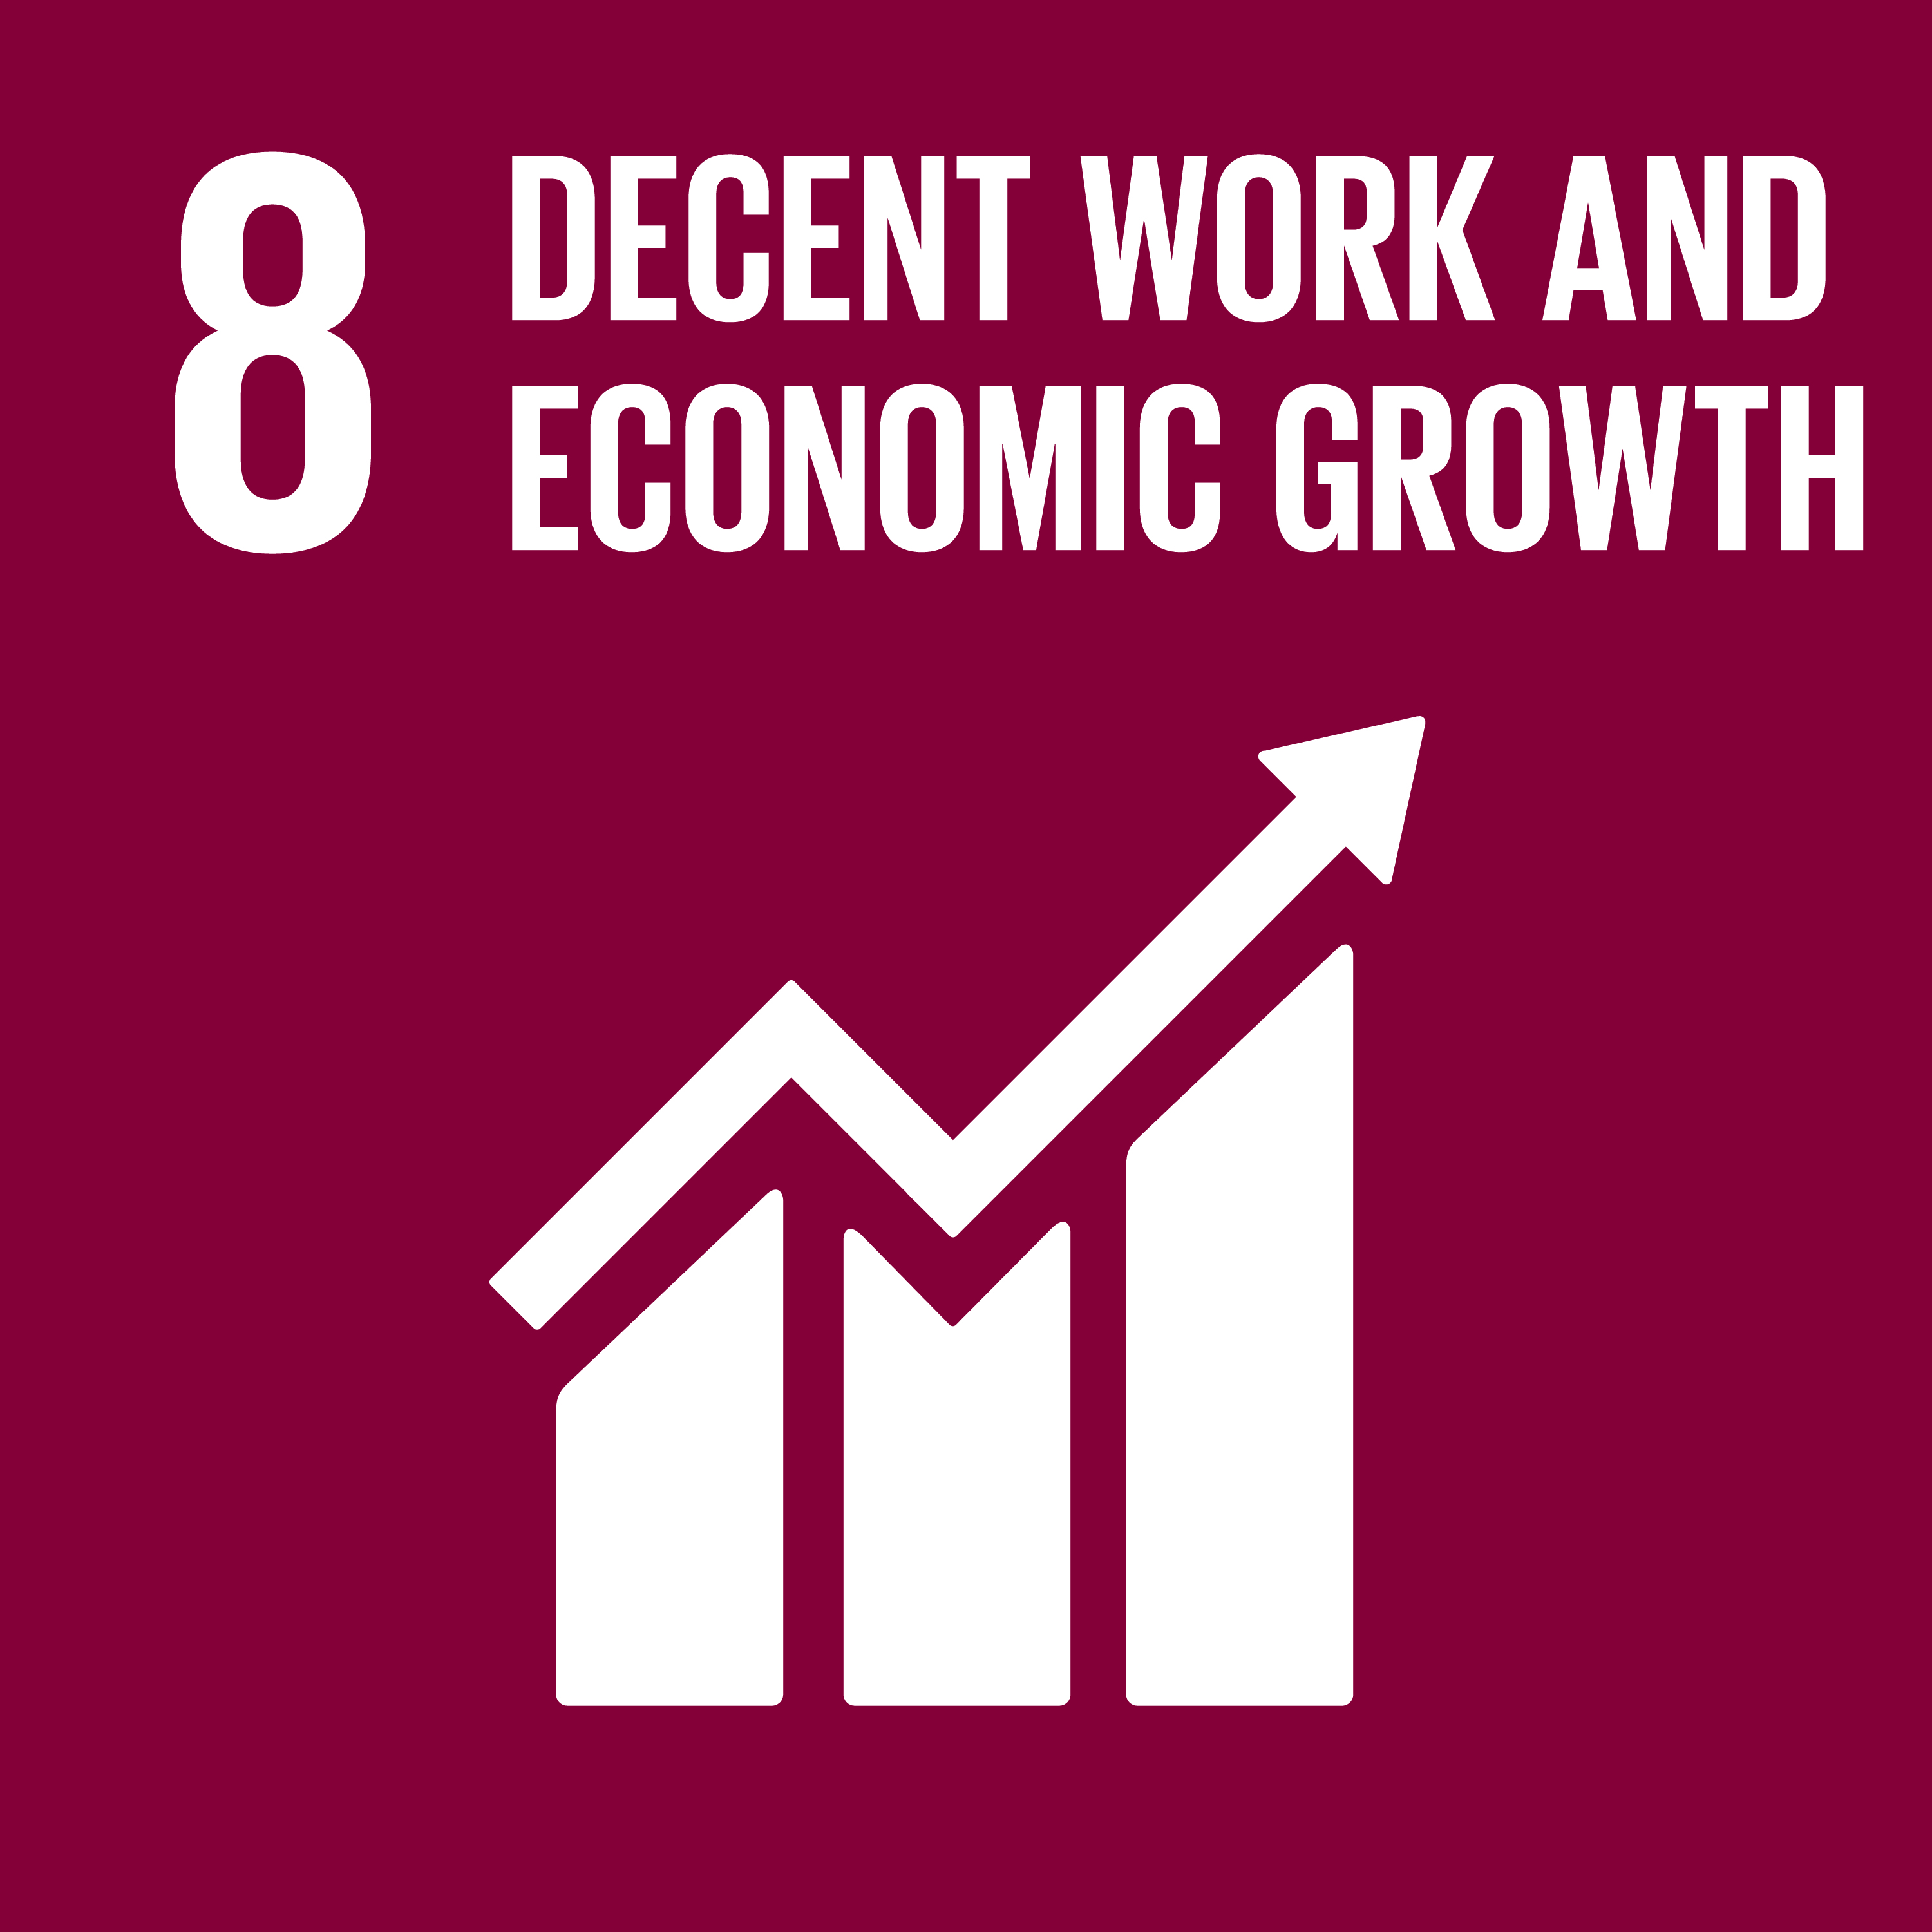 UN Sustainable Development Goal (SDG) 8: Decent Work and Economic Growth.